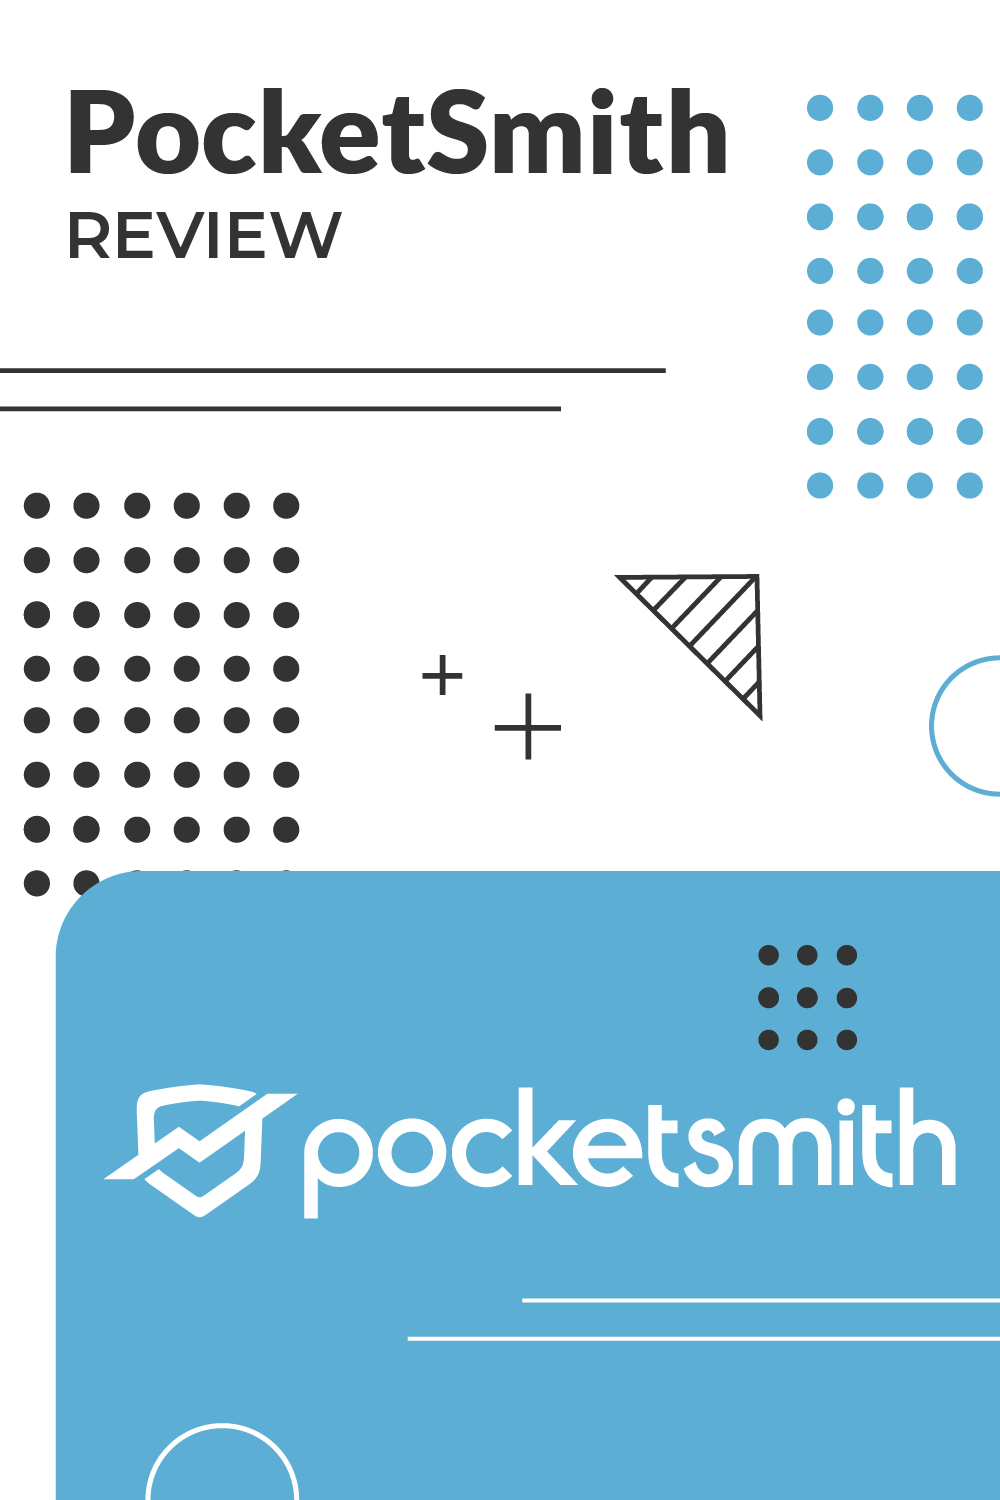 pocketsmith review pinterest image